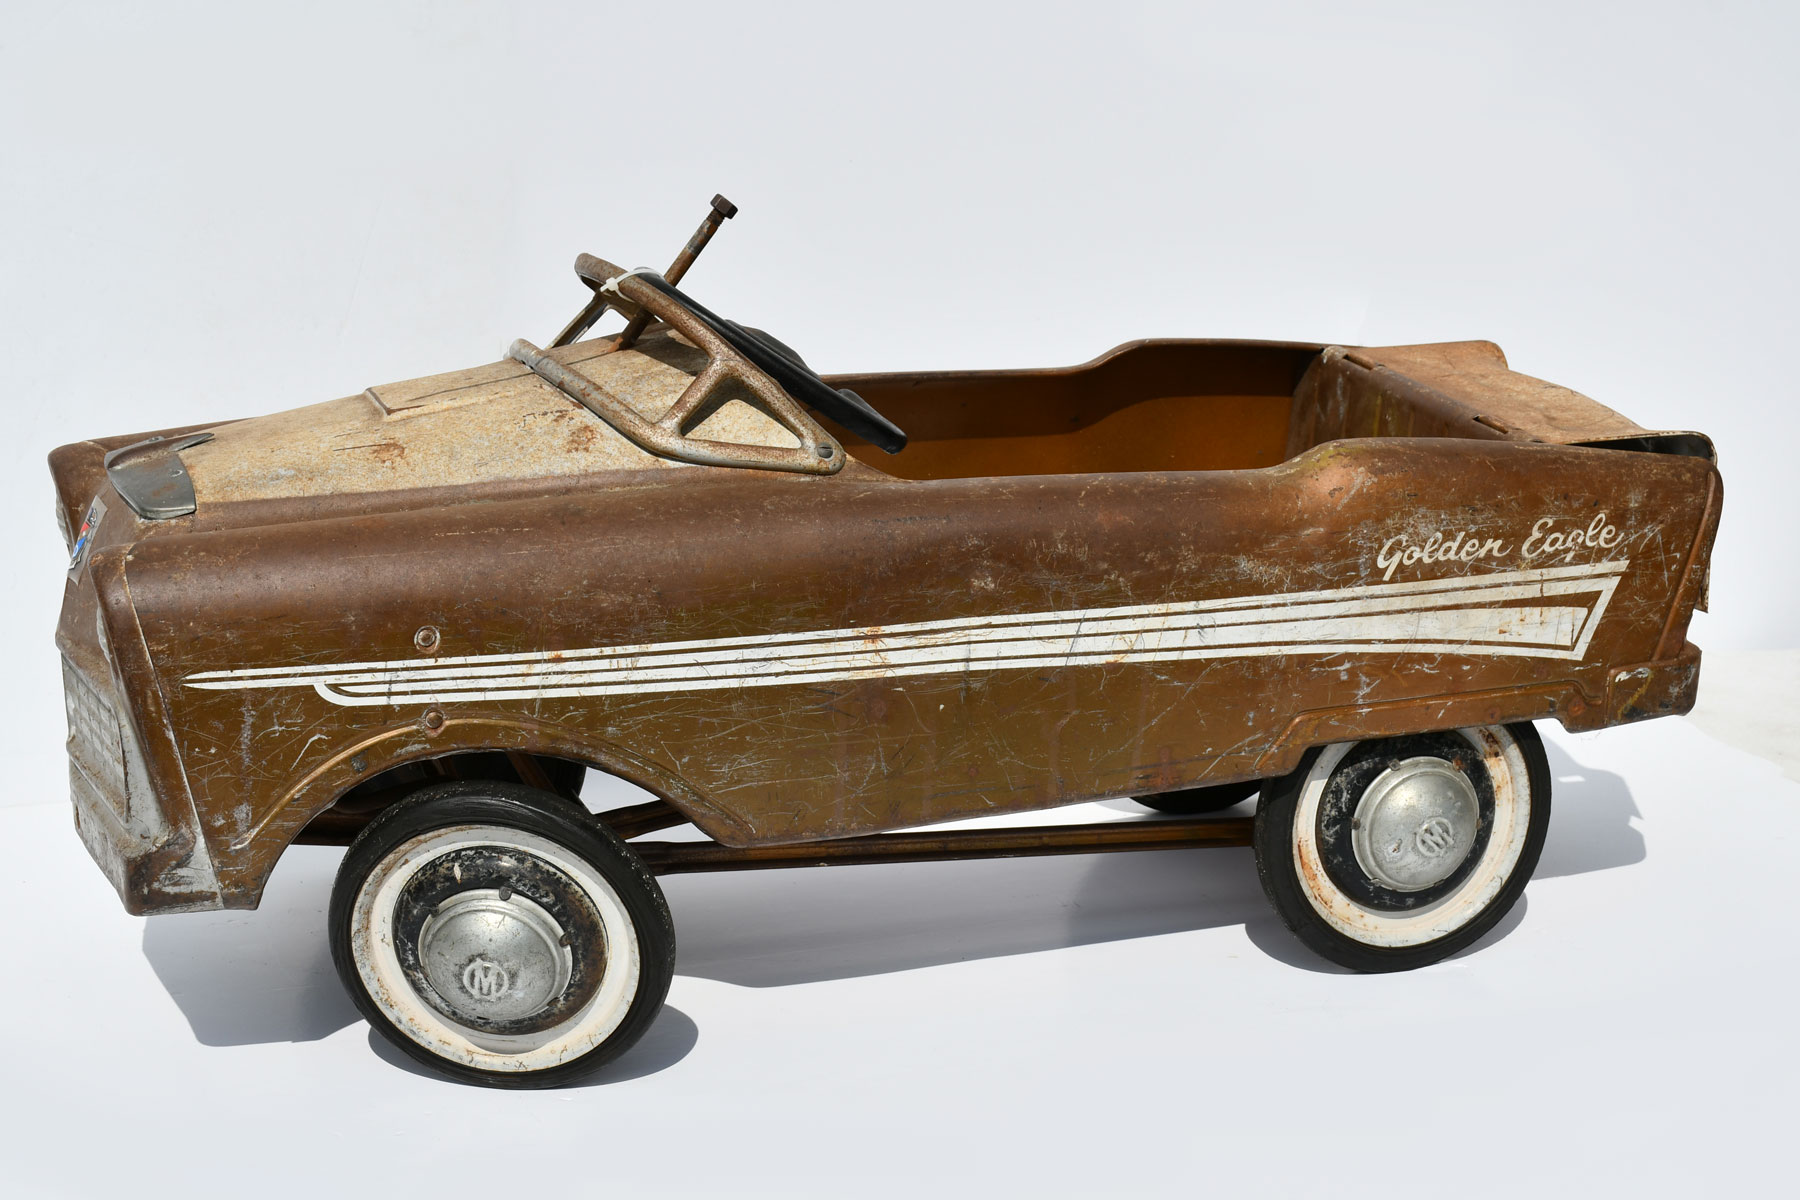 1956 MURRAY GOLDEN EAGLE PEDAL CAR: